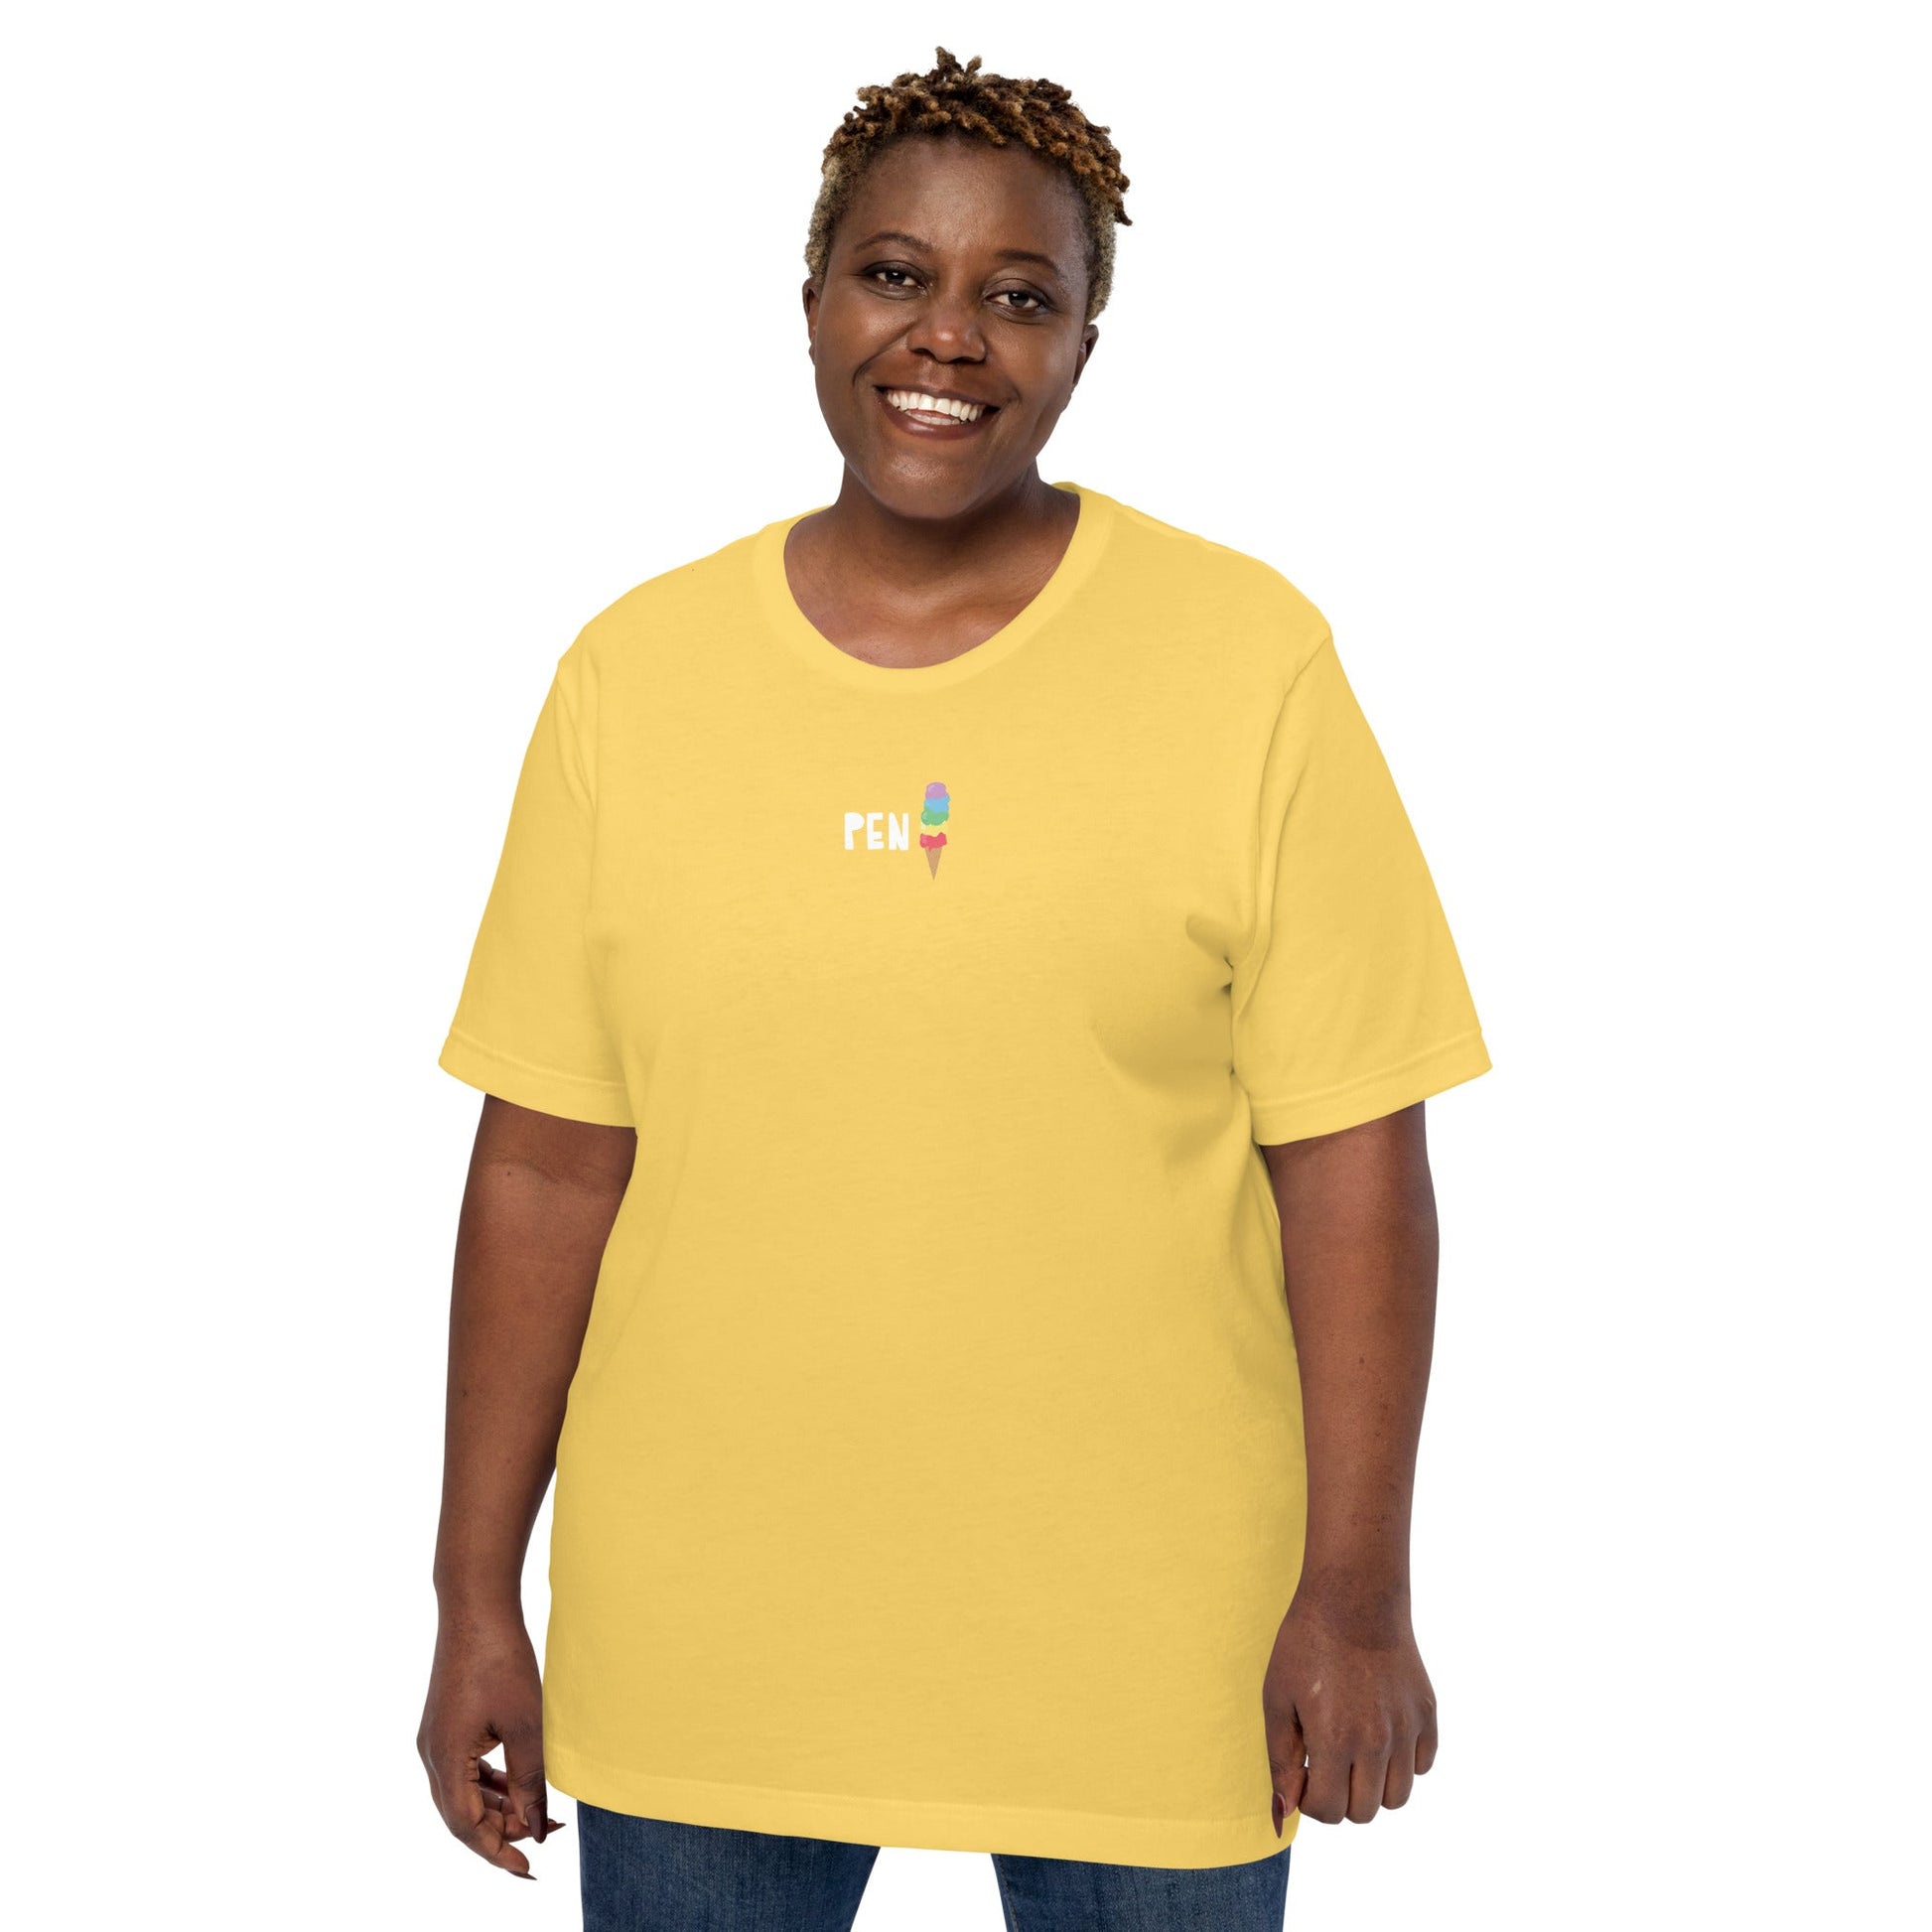 VAGPWR Yellow / S Pen(is) in colour - Unisex t-shirt